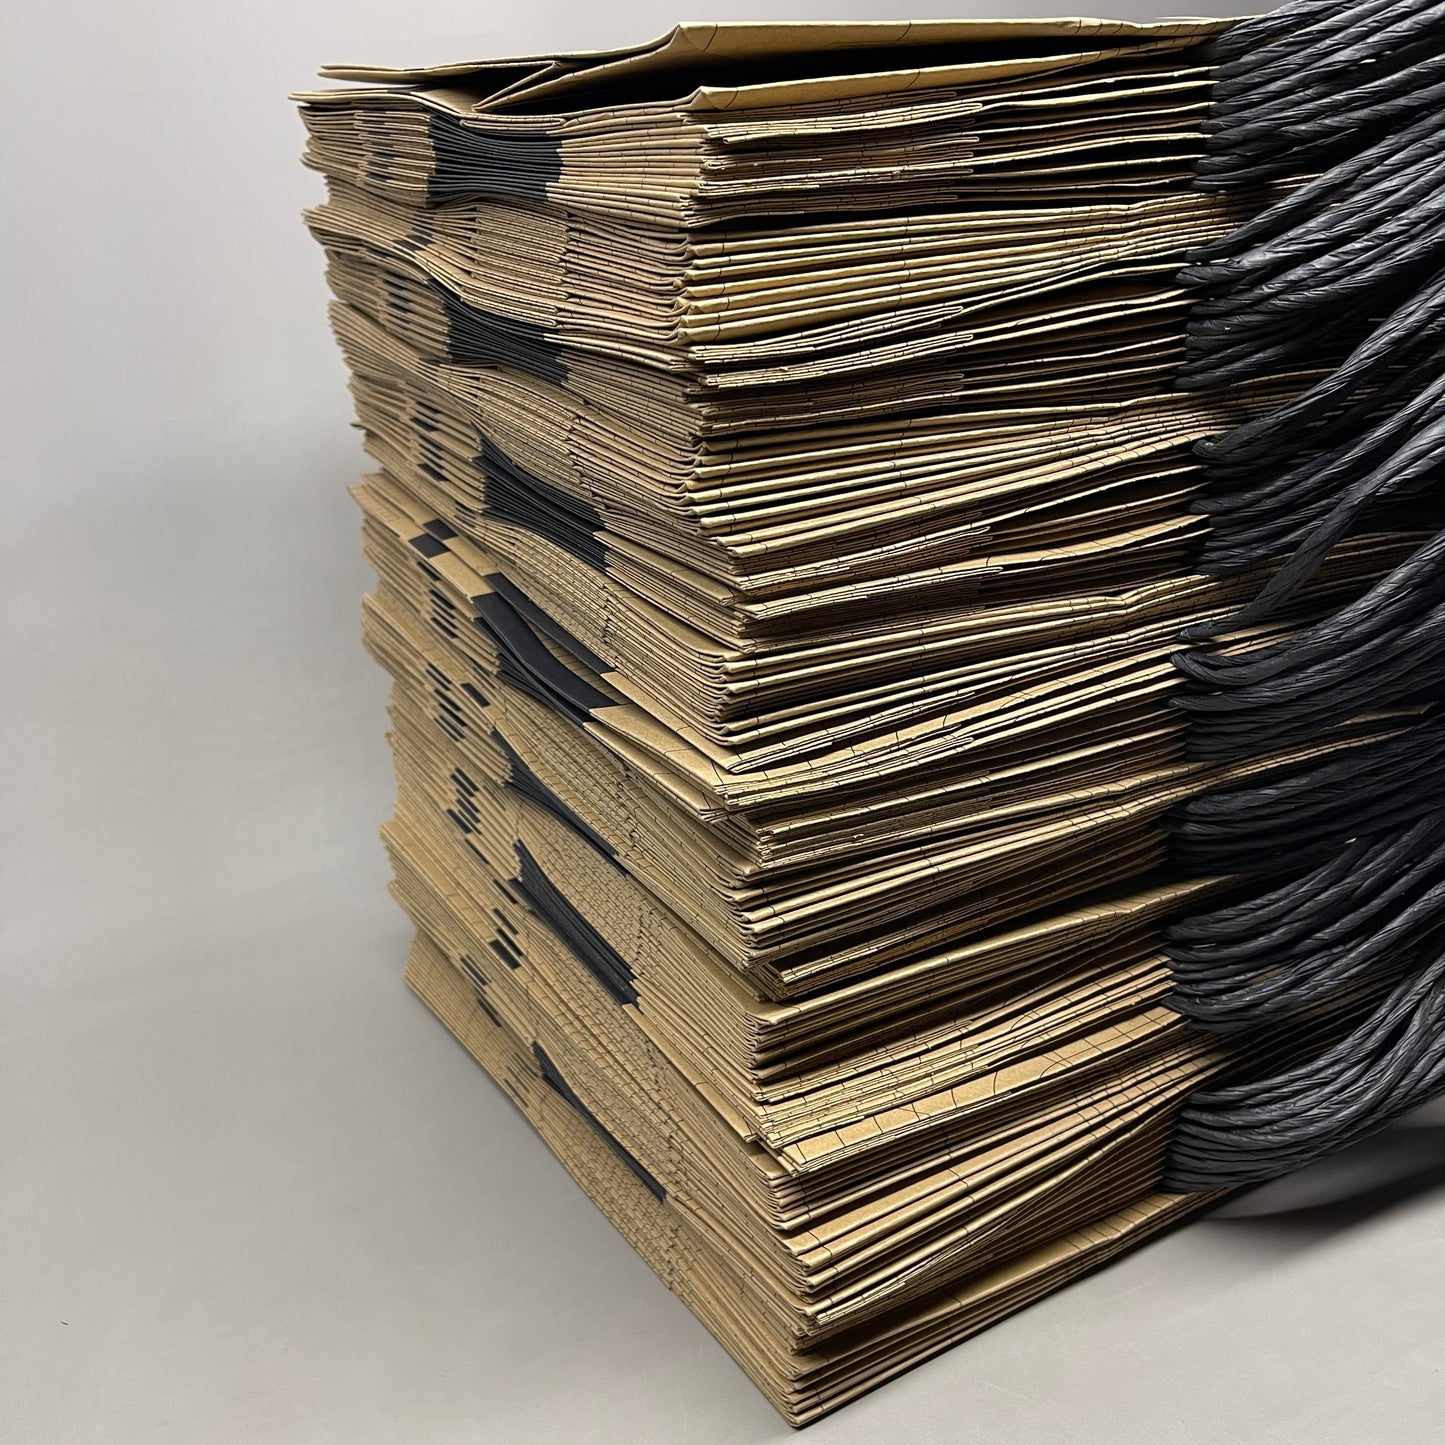 NIKE Paper Shopping Bags 150-Pack! Sz M 16” x 13” x 5” (New)